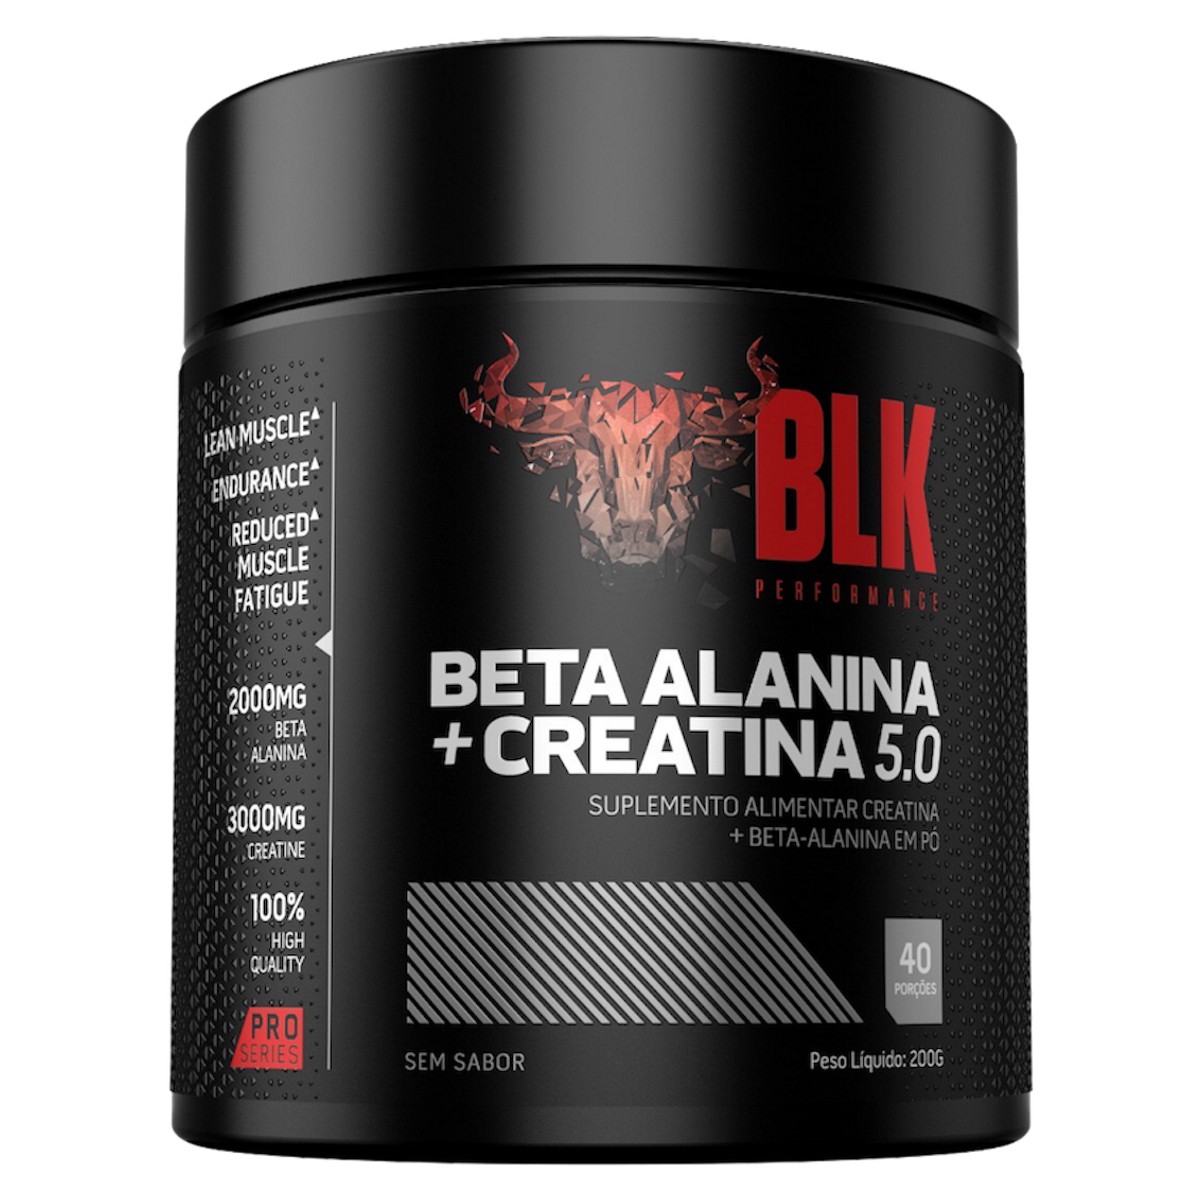 Beta Alanina + Creatina 200g - BLK Performance | LifeStyleSuplementos - Os  Melhores Suplementos Nacionais e Importados